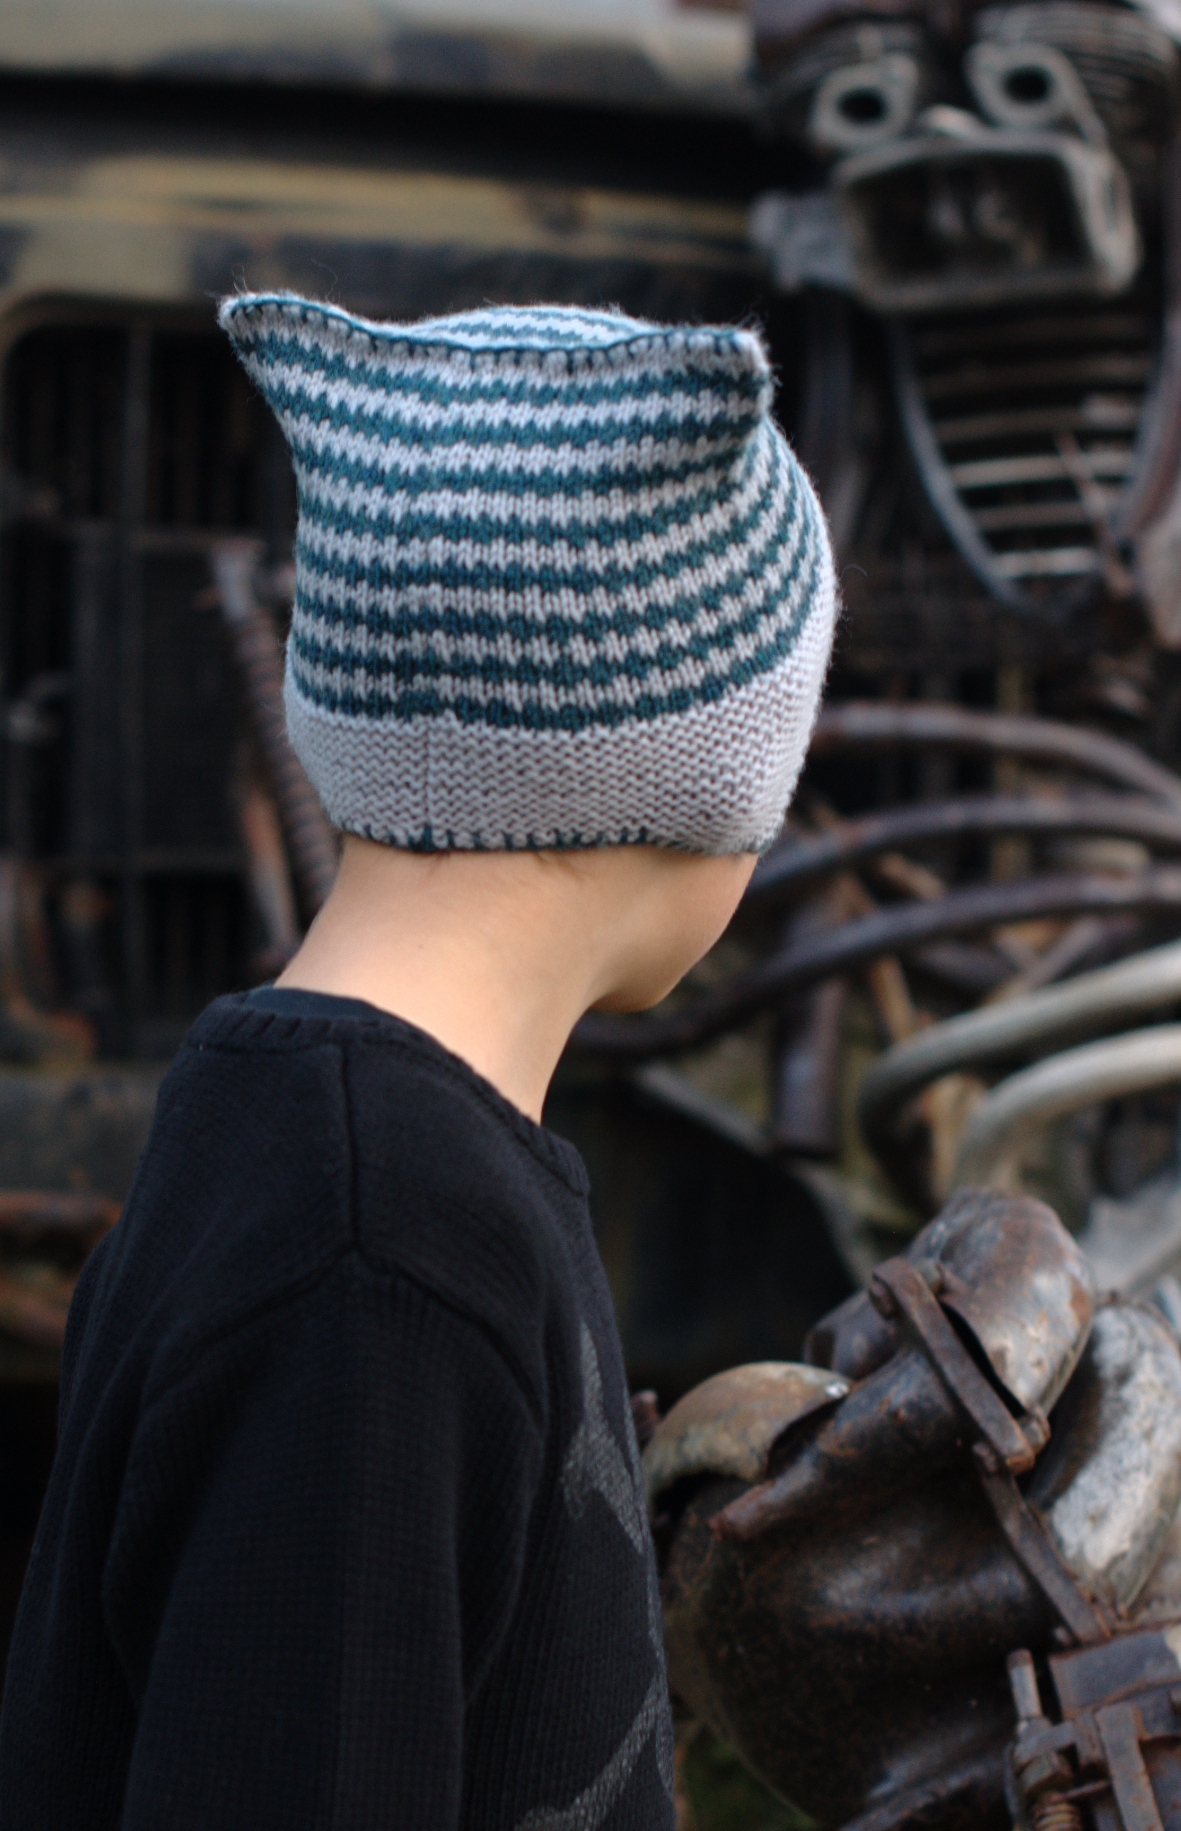 Pinion skater style chullo Hat knitting pattern